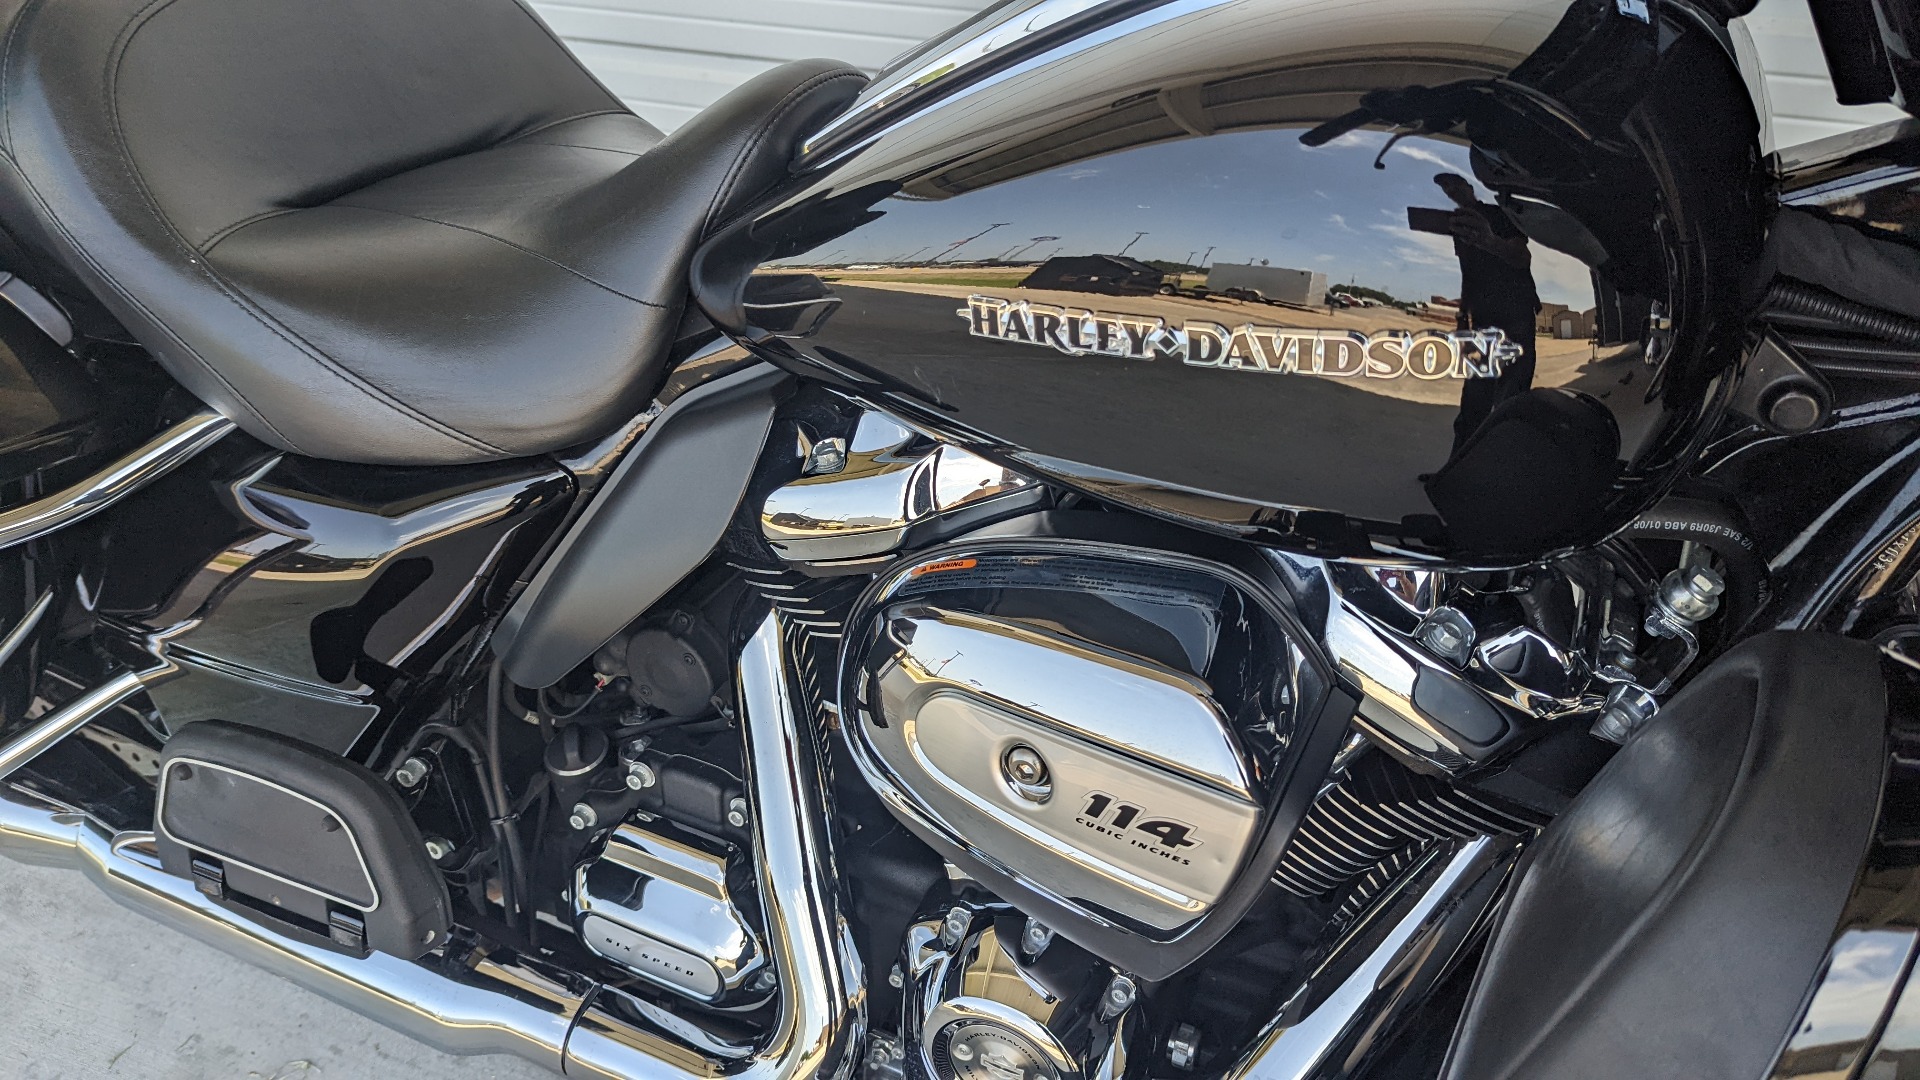 2019 Harley-Davidson Ultra Limited in Monroe, Louisiana - Photo 11